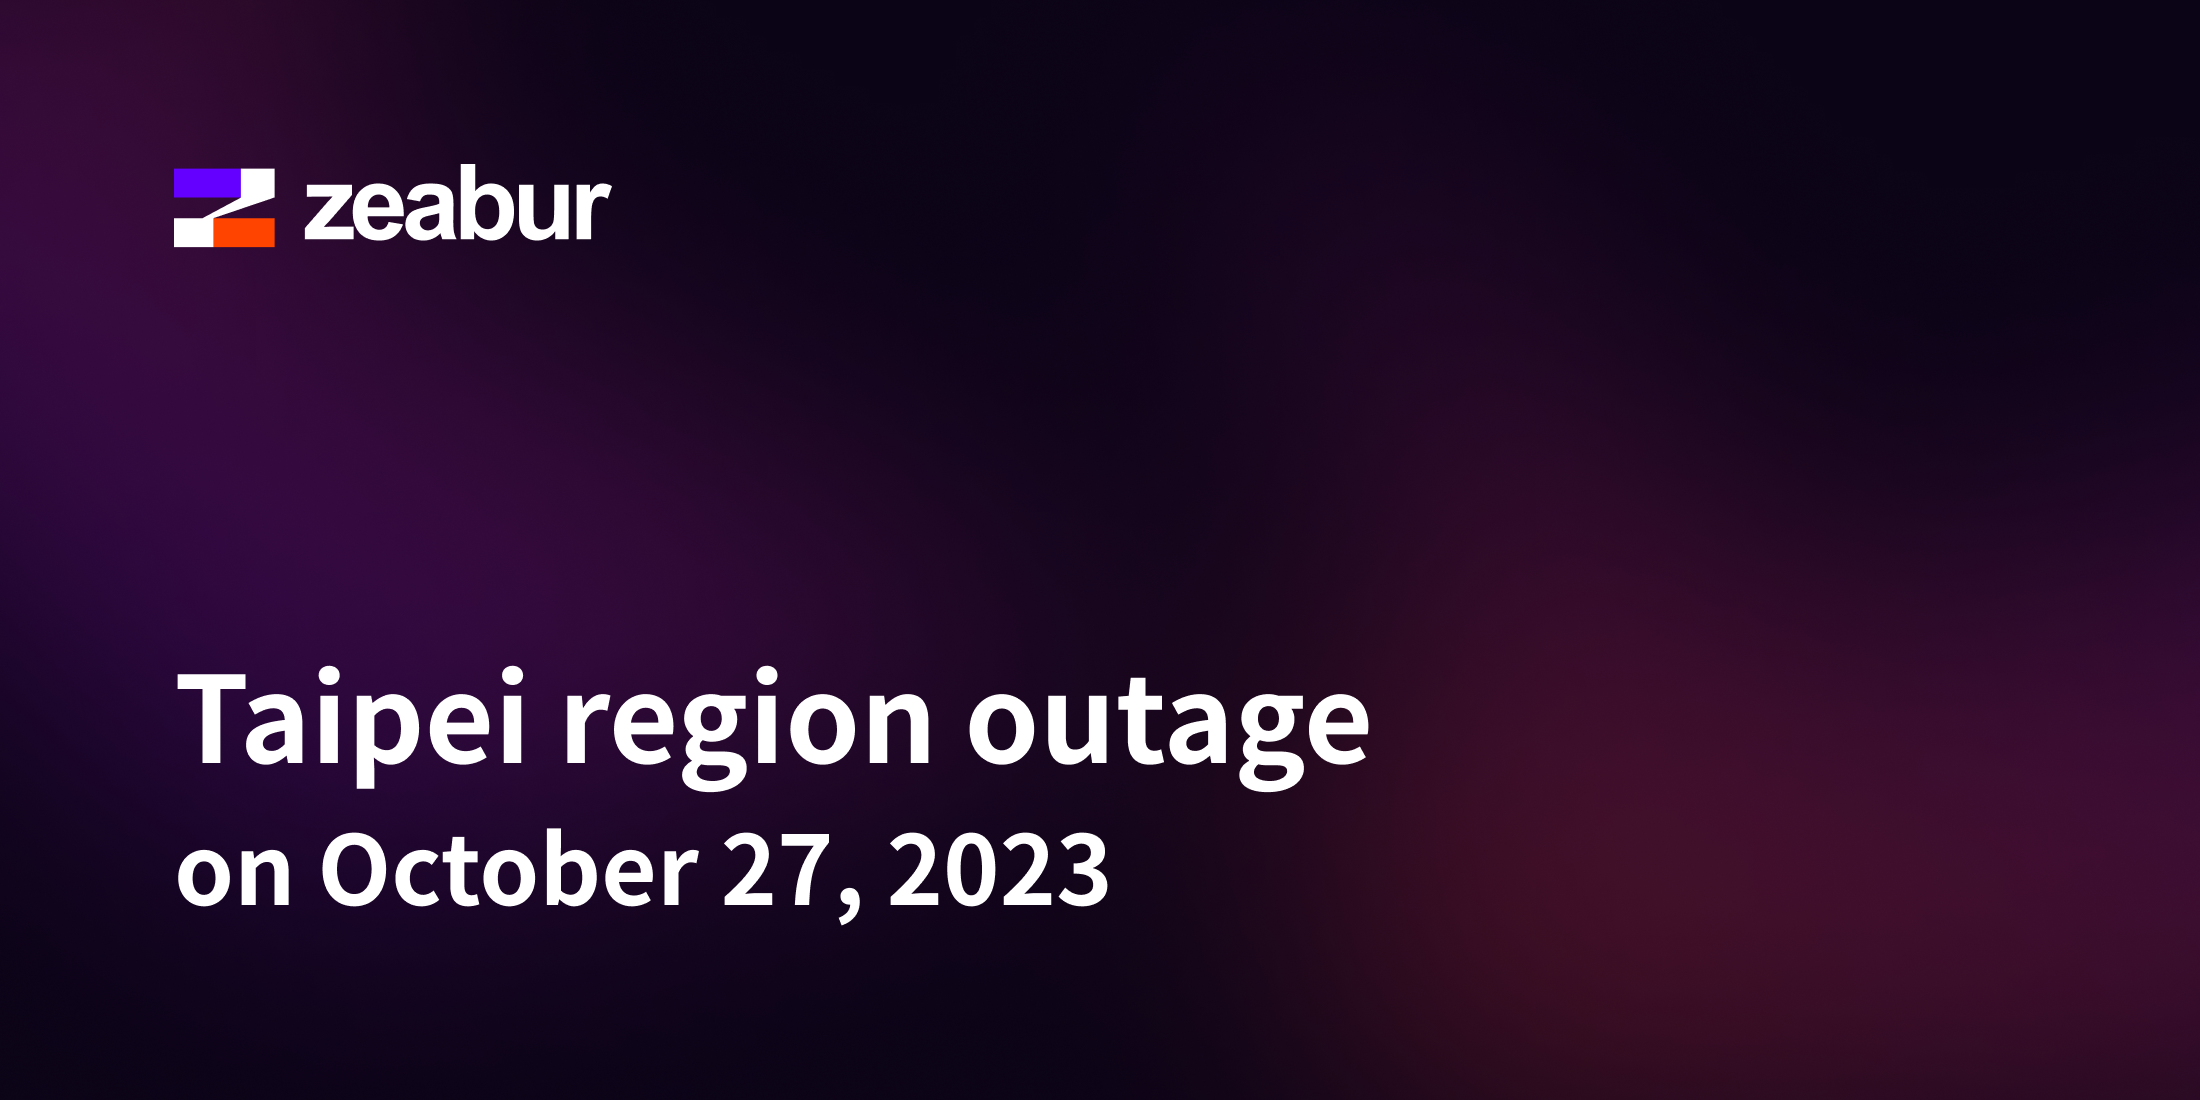 Zeabur Taipei region outage on October 27, 2023